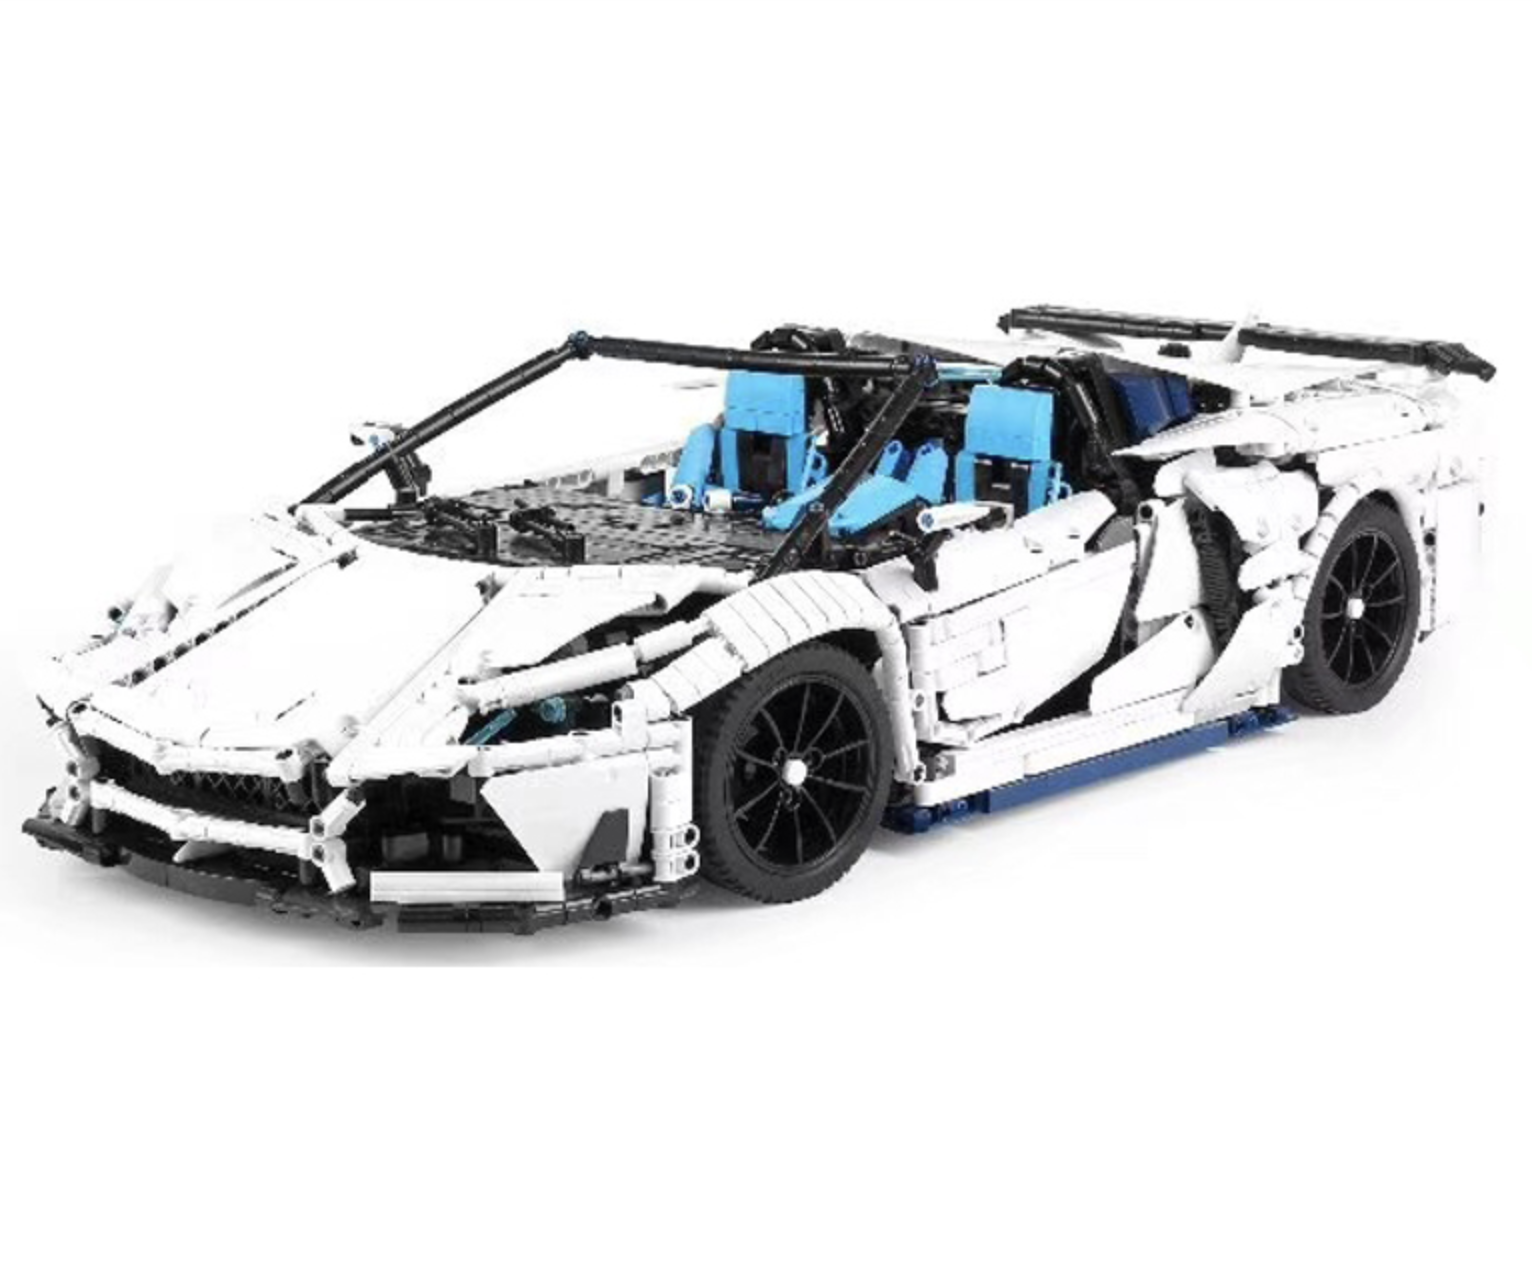 Lamborghini Aventador Roadster s set, compatible with Lego